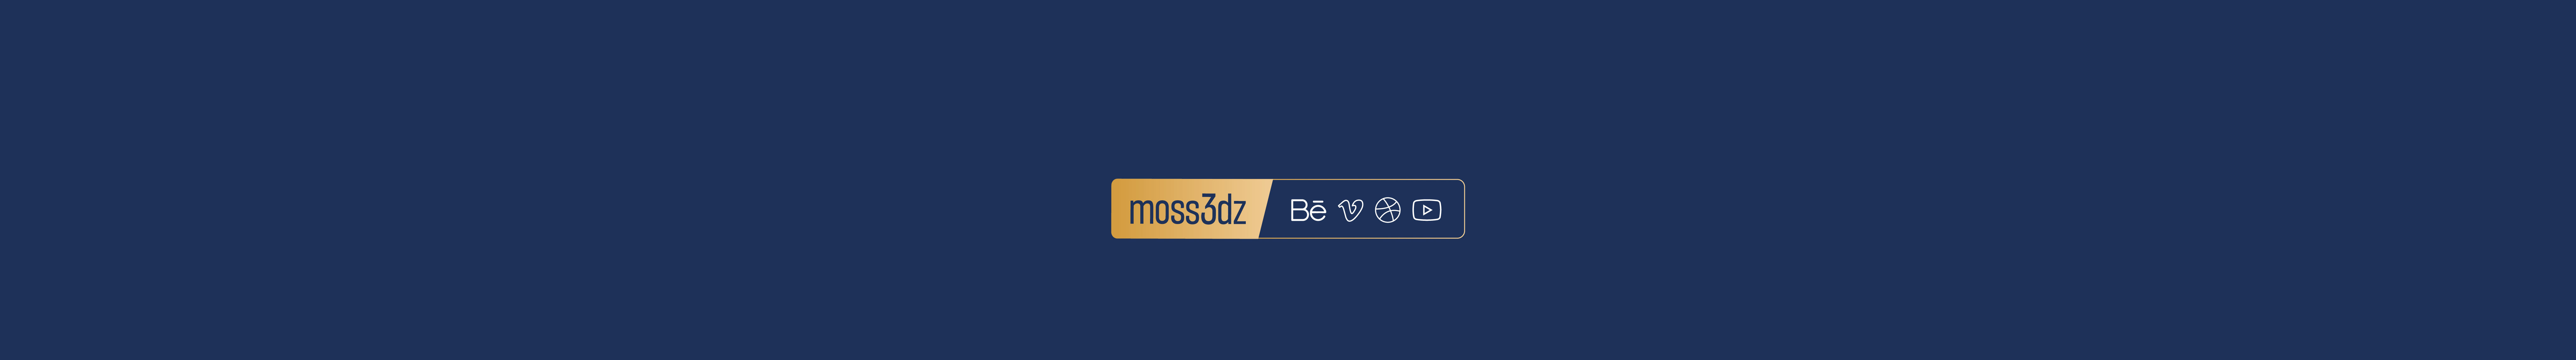 Mena Mossad's profile banner